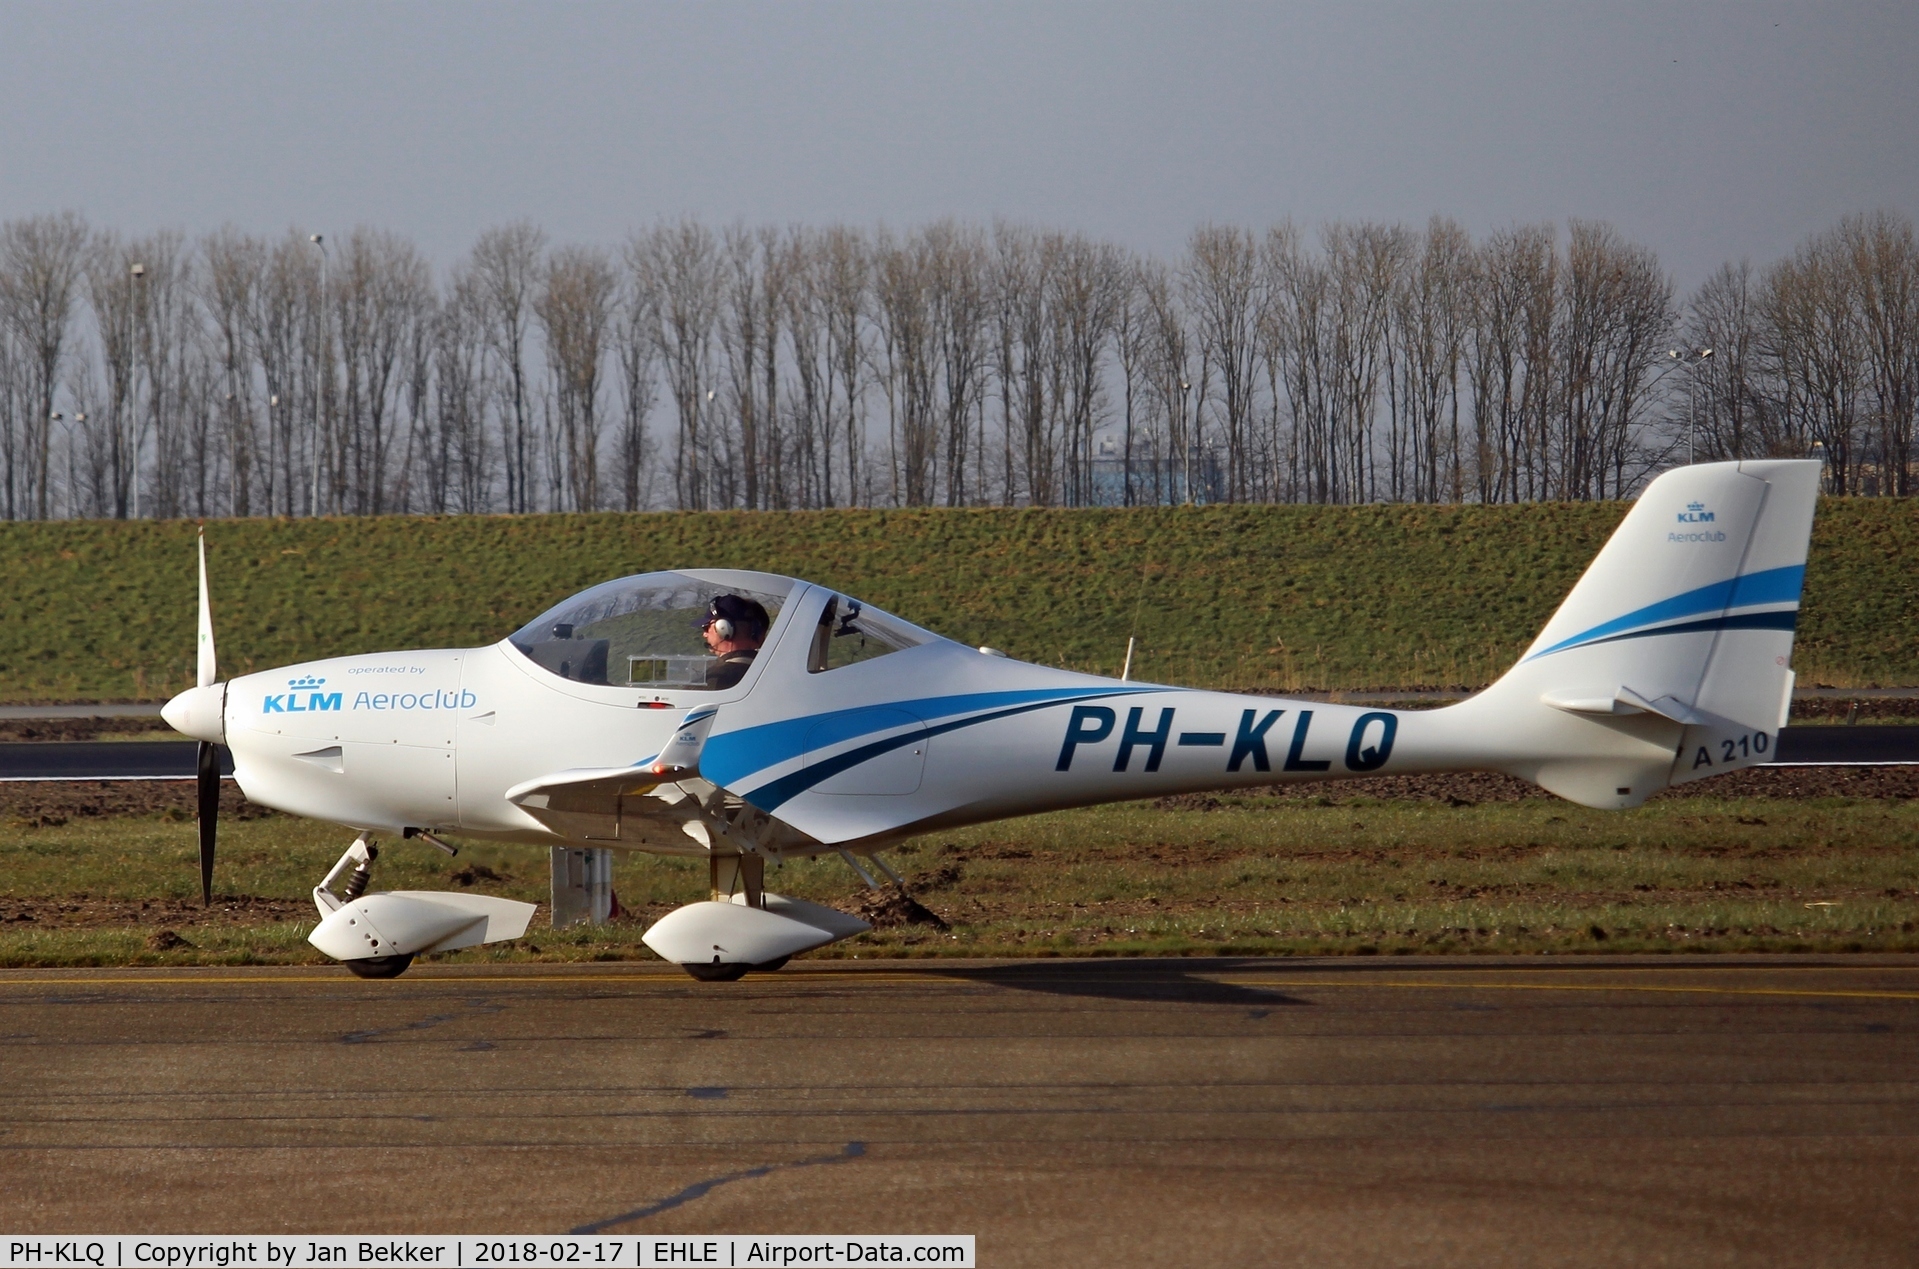 PH-KLQ, 2012 Aquila A210 (AT01) C/N AT01-251, Lelystad Airport KLM aeroclub